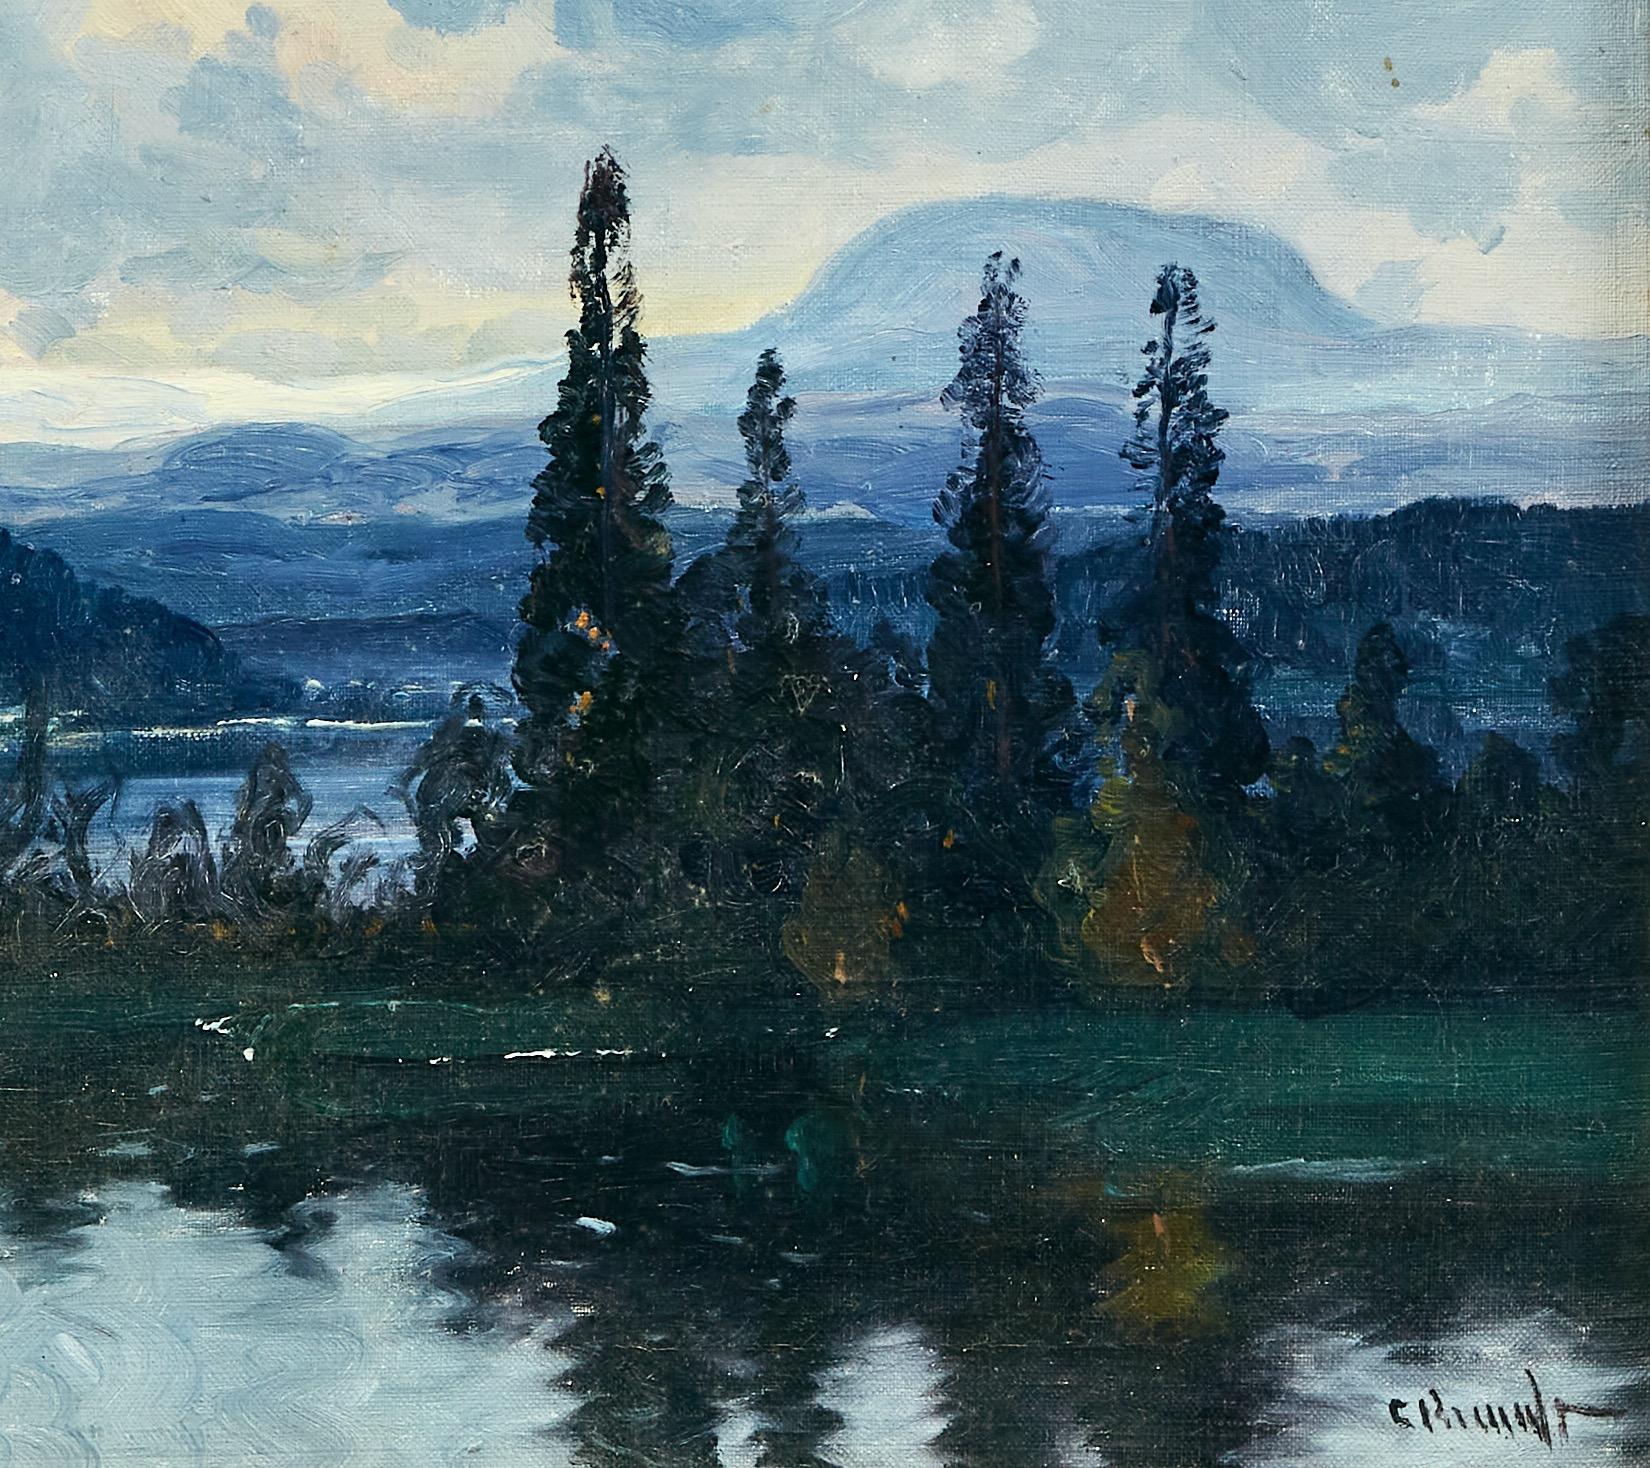 Carl Brandt, Swedish Mountain Landscape, 